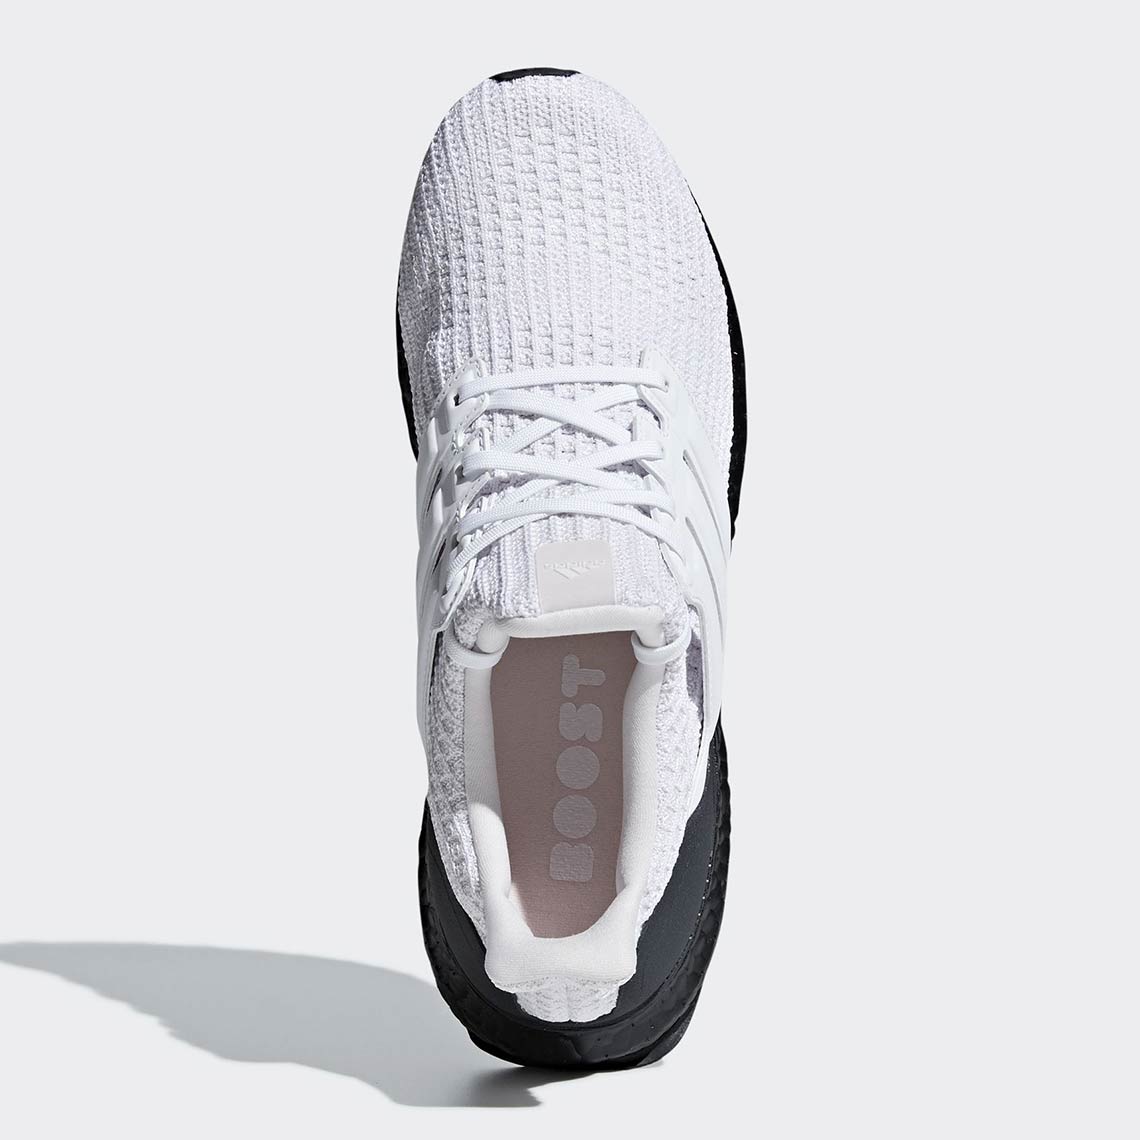 Adidas Ultra Boost White Black Db3197 4